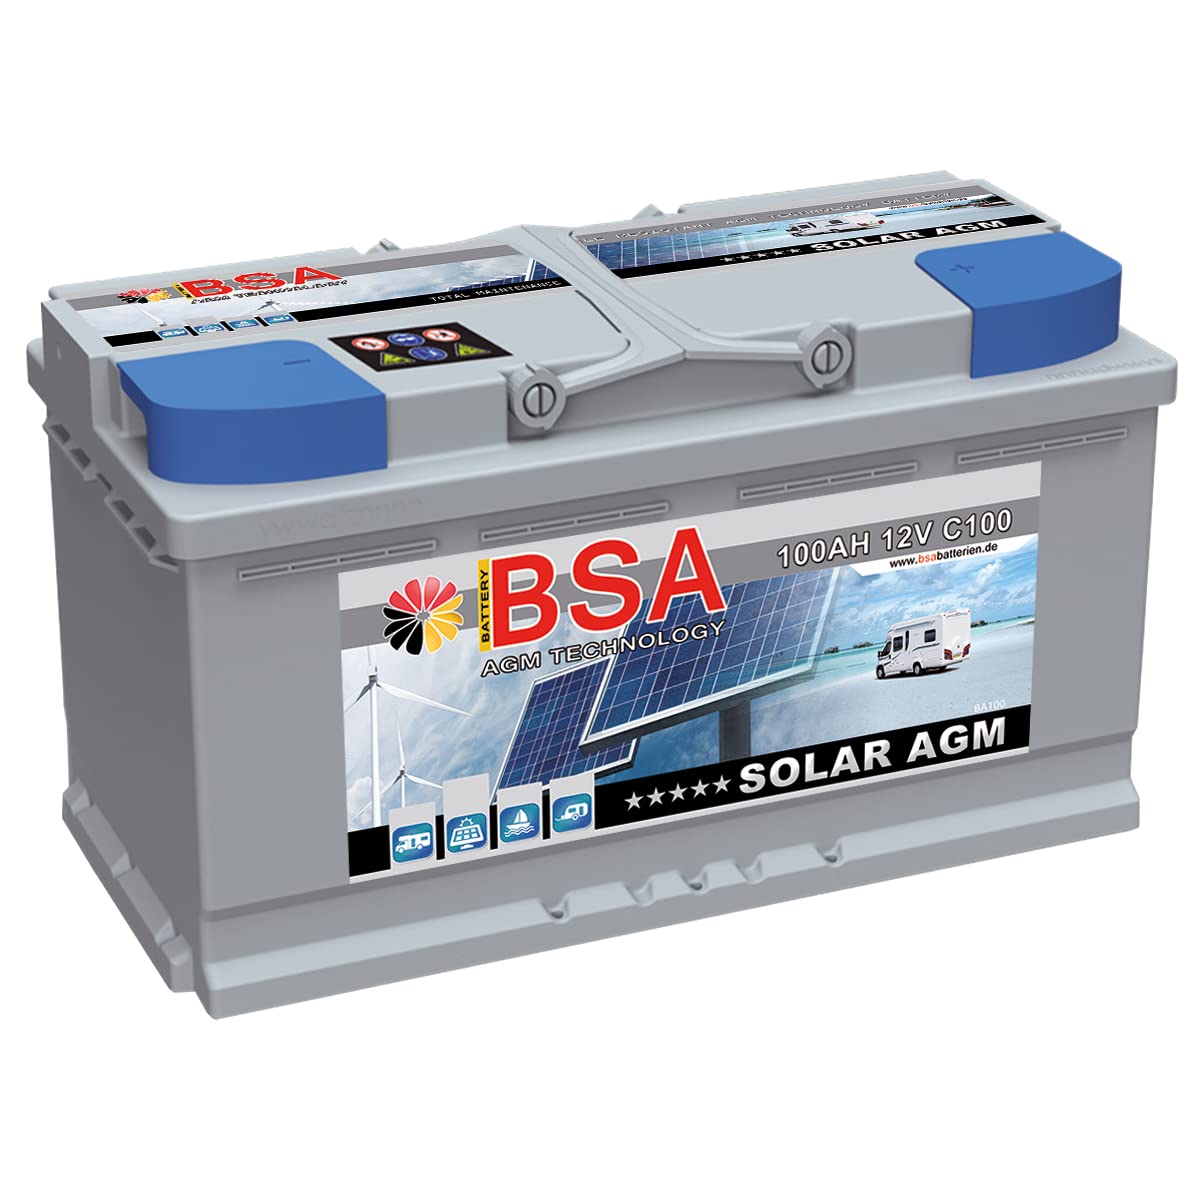 BSA Solarbatterie 12V 100Ah Solar Akku Wohnmobil Boot Mover Schiff AGM Gel Batterie von BSA BATTERY HIGH QUALITY BATTERIES